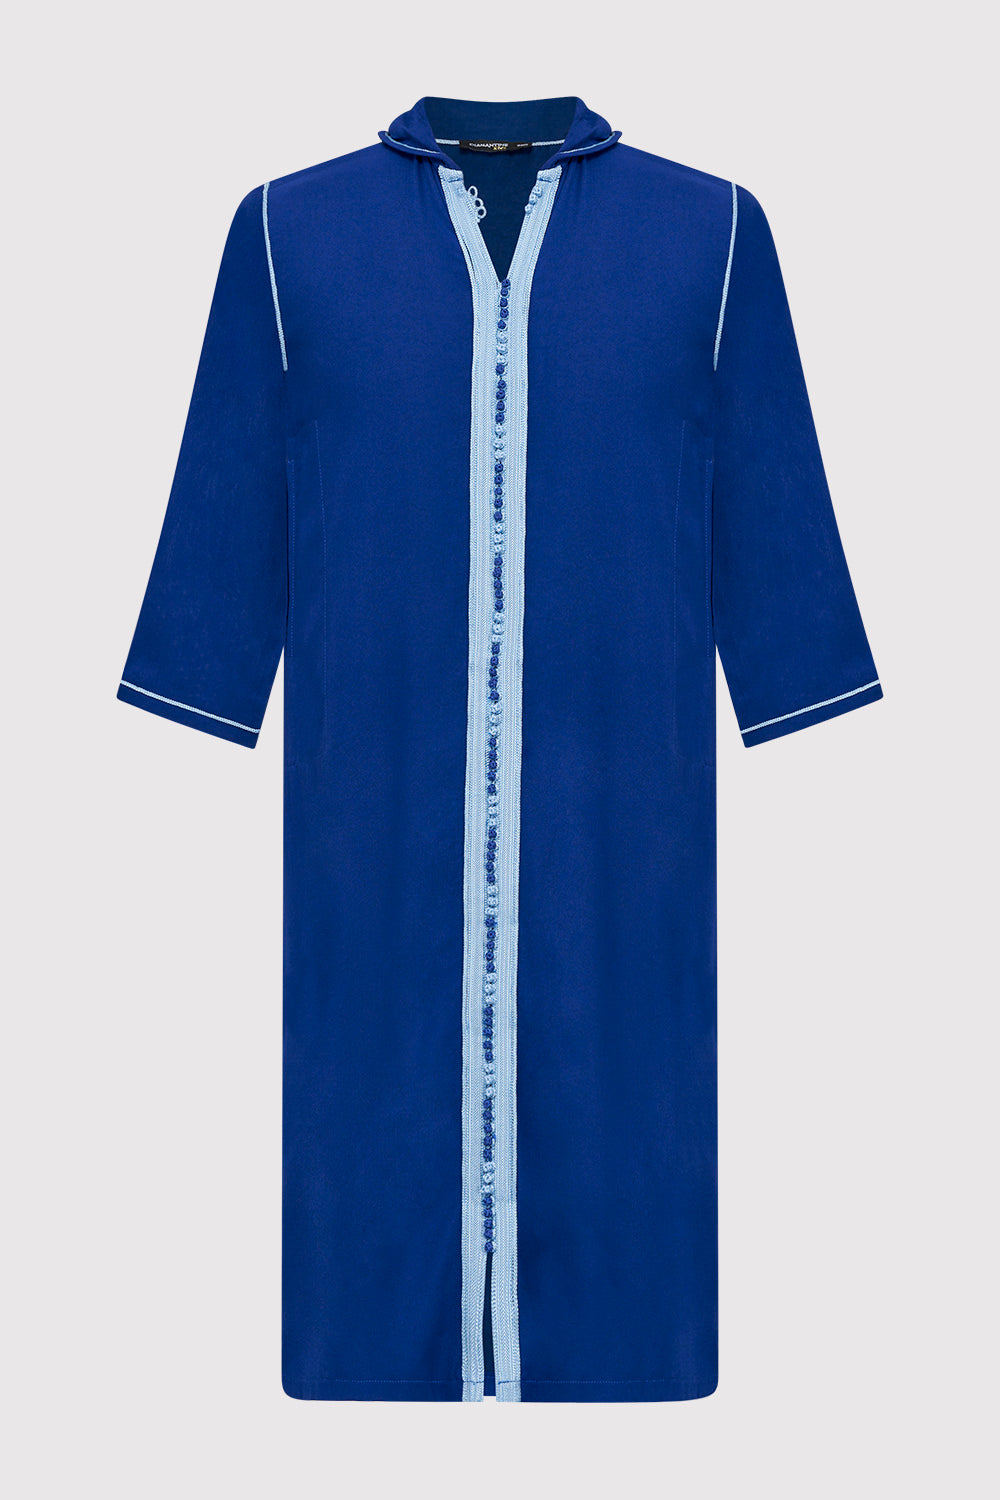 Djellaba Jad Boy's Hooded Long Sleeve Full-Length Robe Thobe in Royal Blue (2-12yrs)